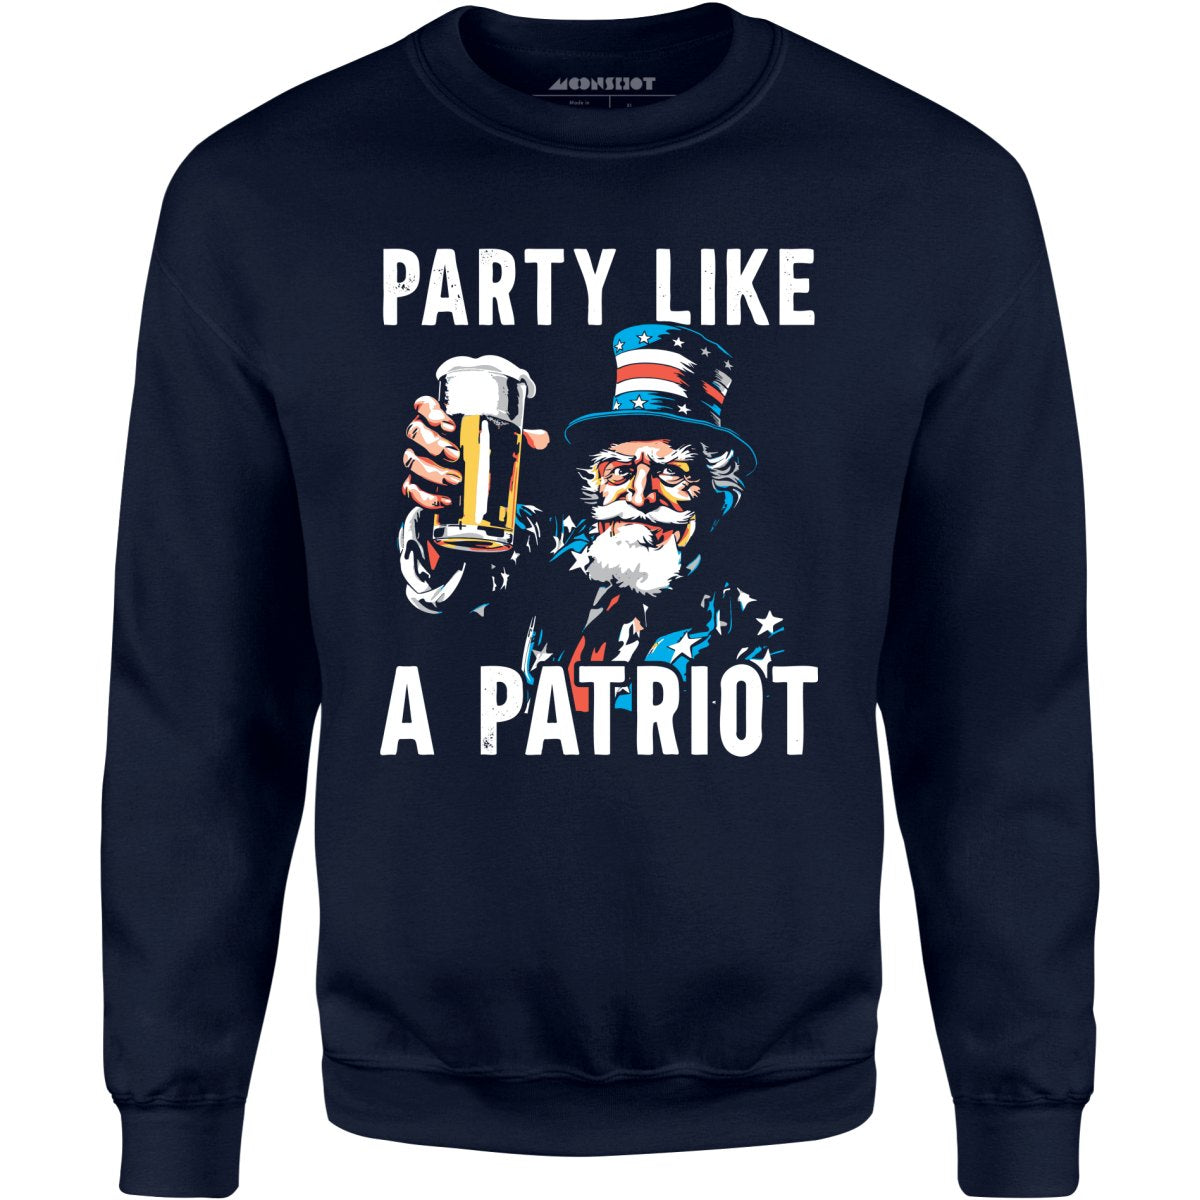 Party Like a Patriot - Unisex Sweatshirt